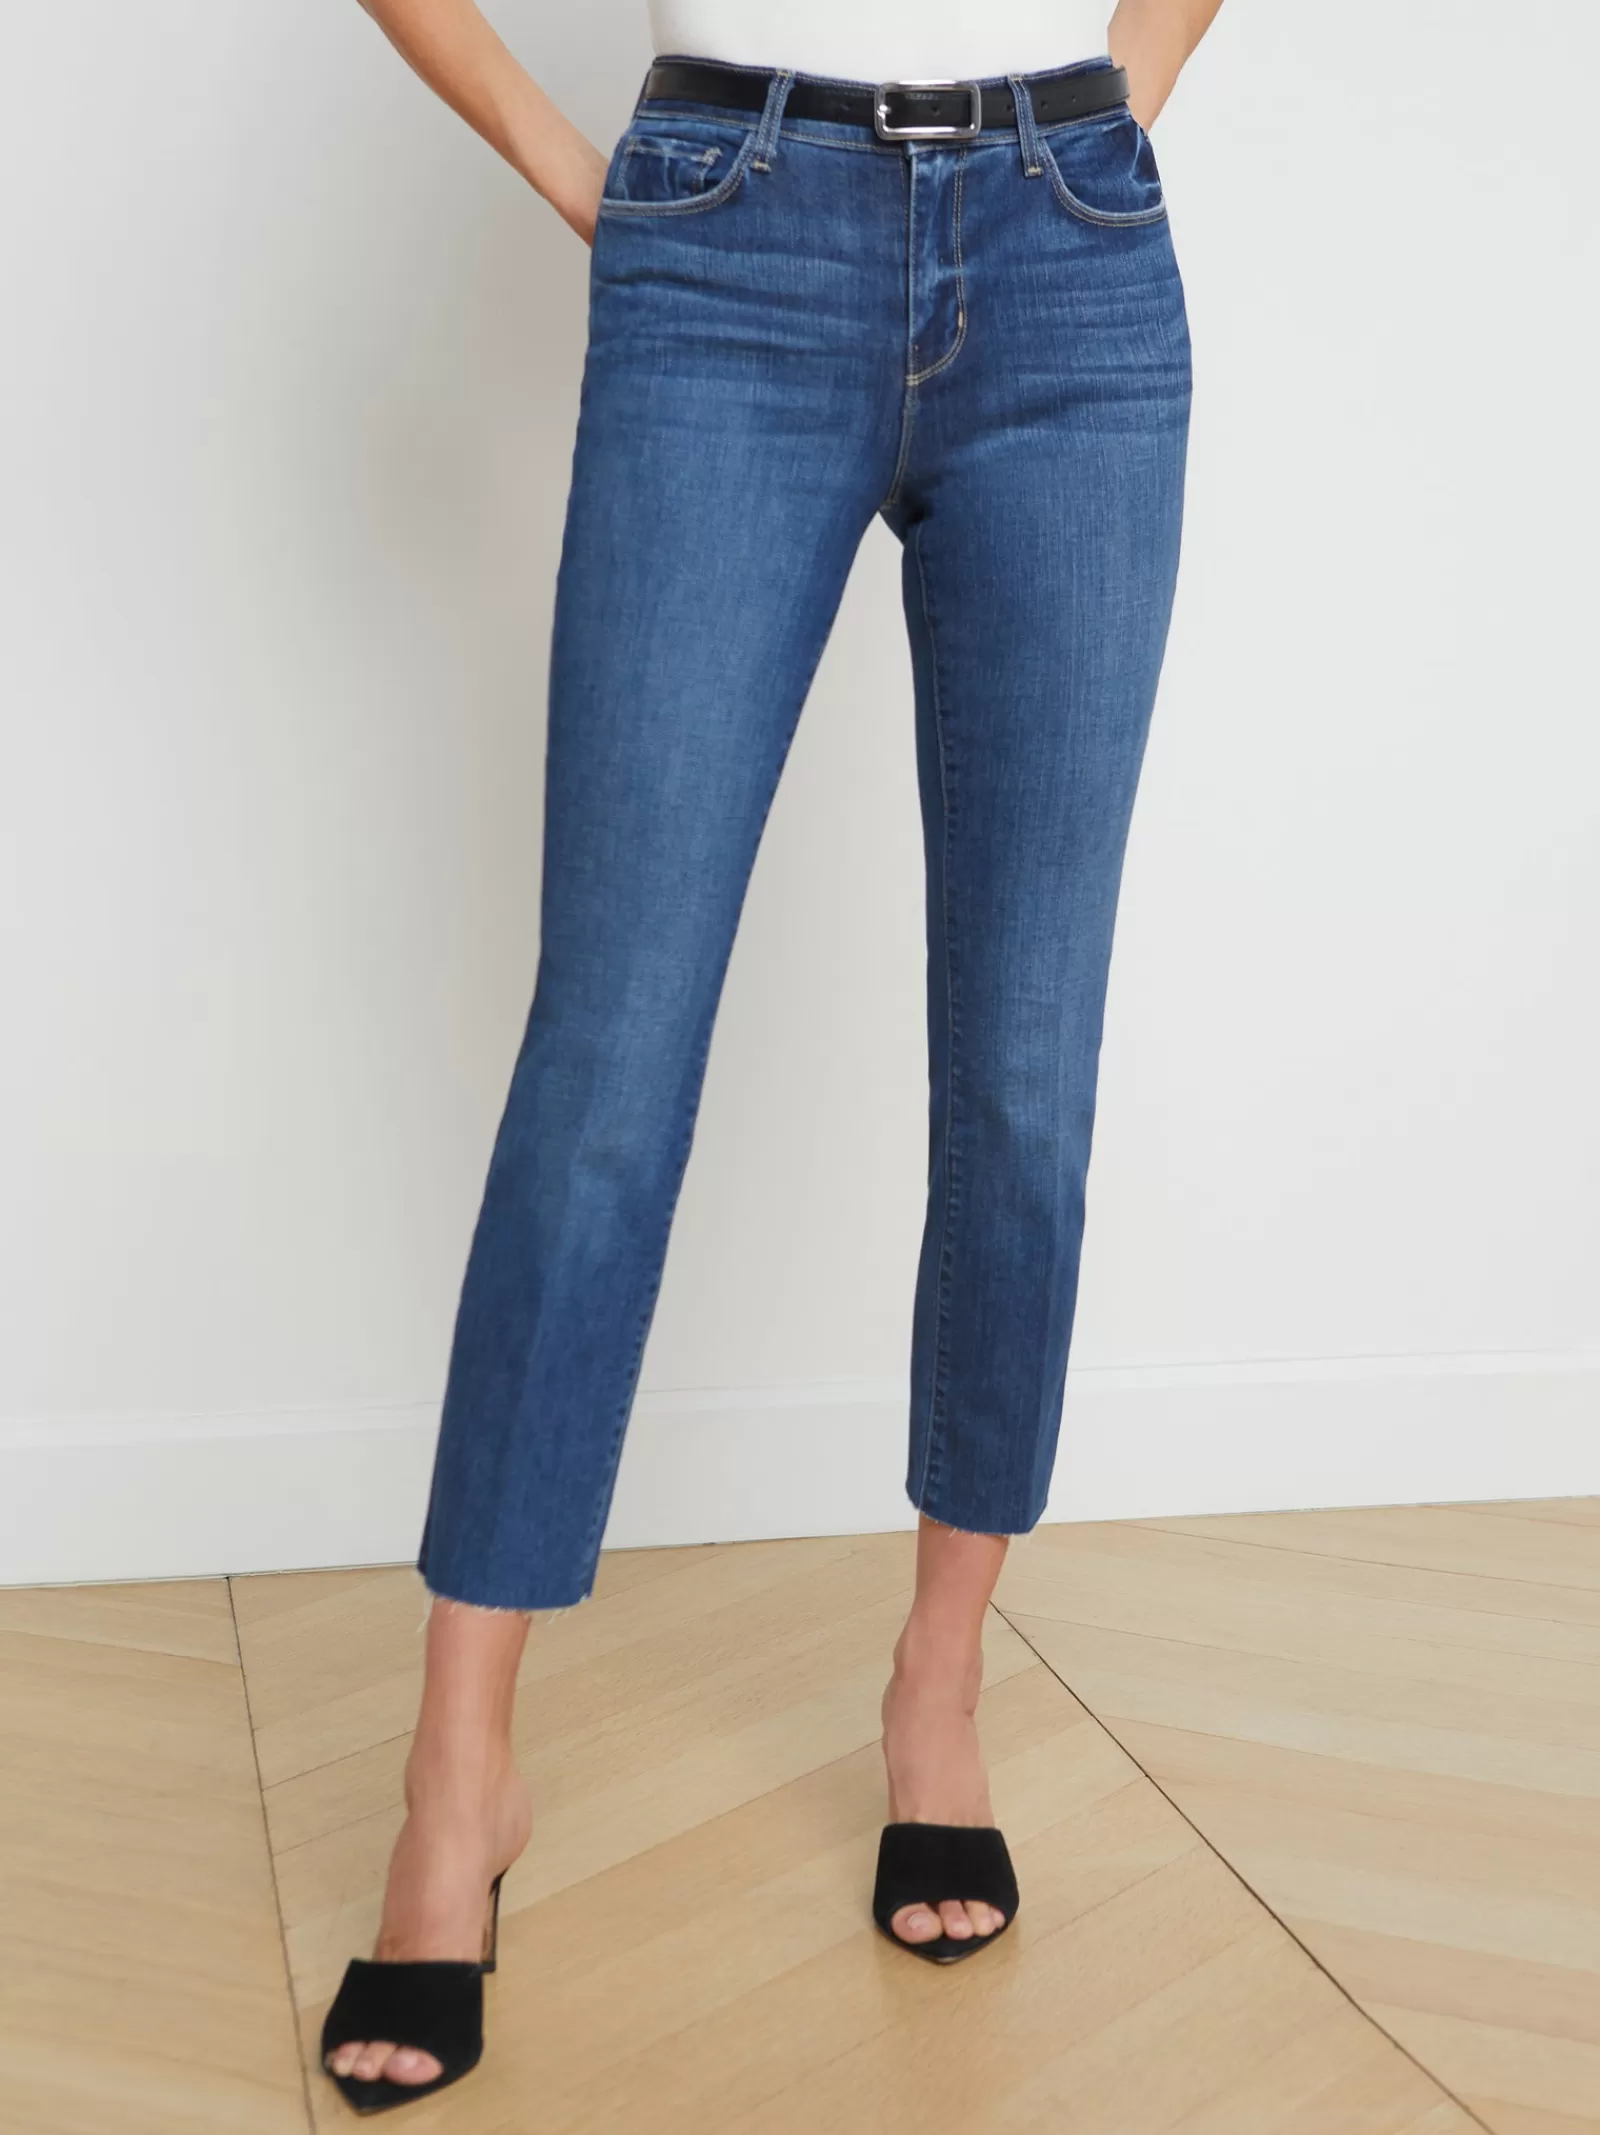 L'AGENCE Sada Slim-Leg Cropped Jean< Petite | Straight